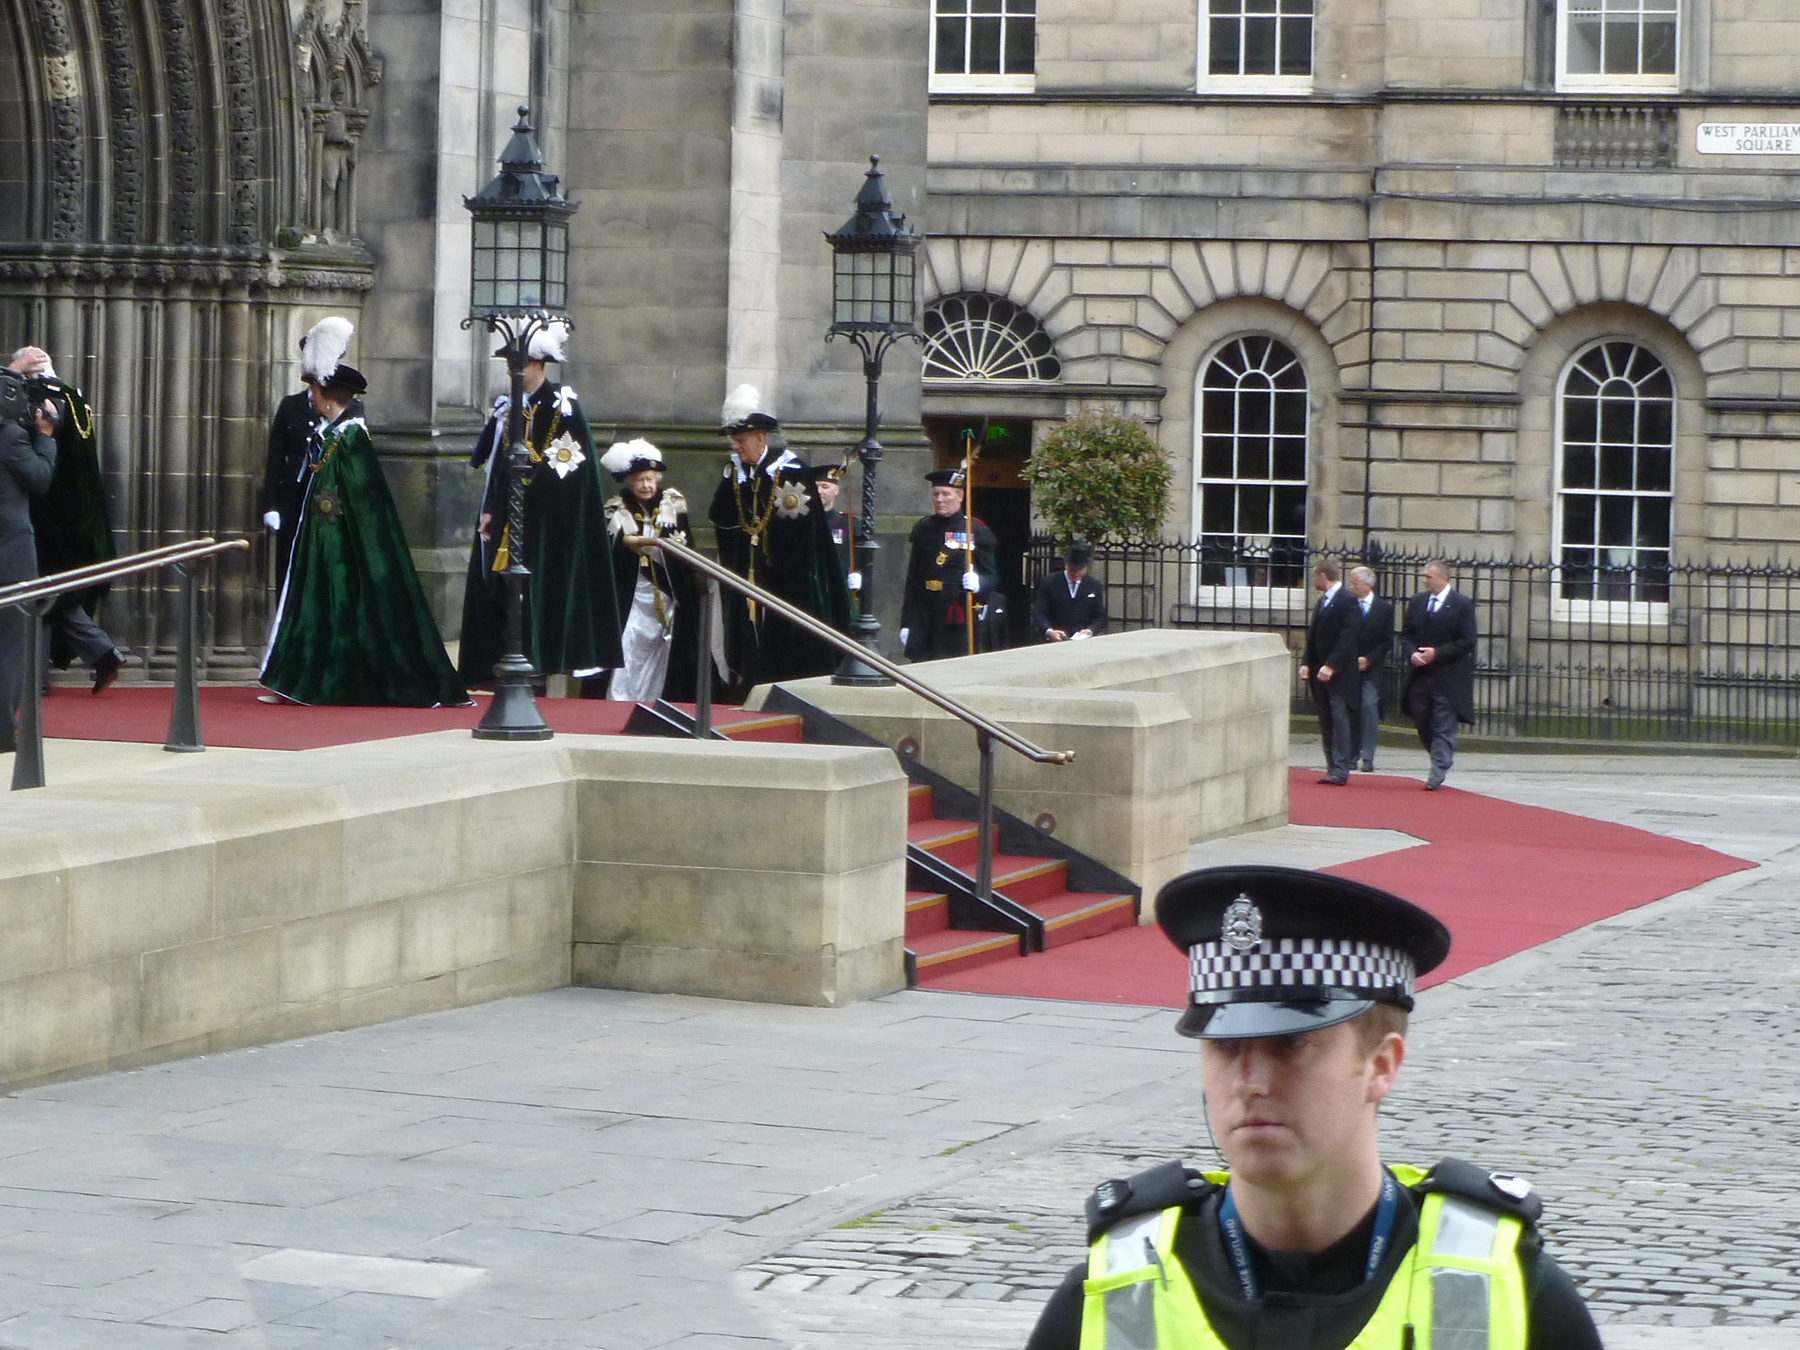 Queen Elizabeth II leaving a cathedral.